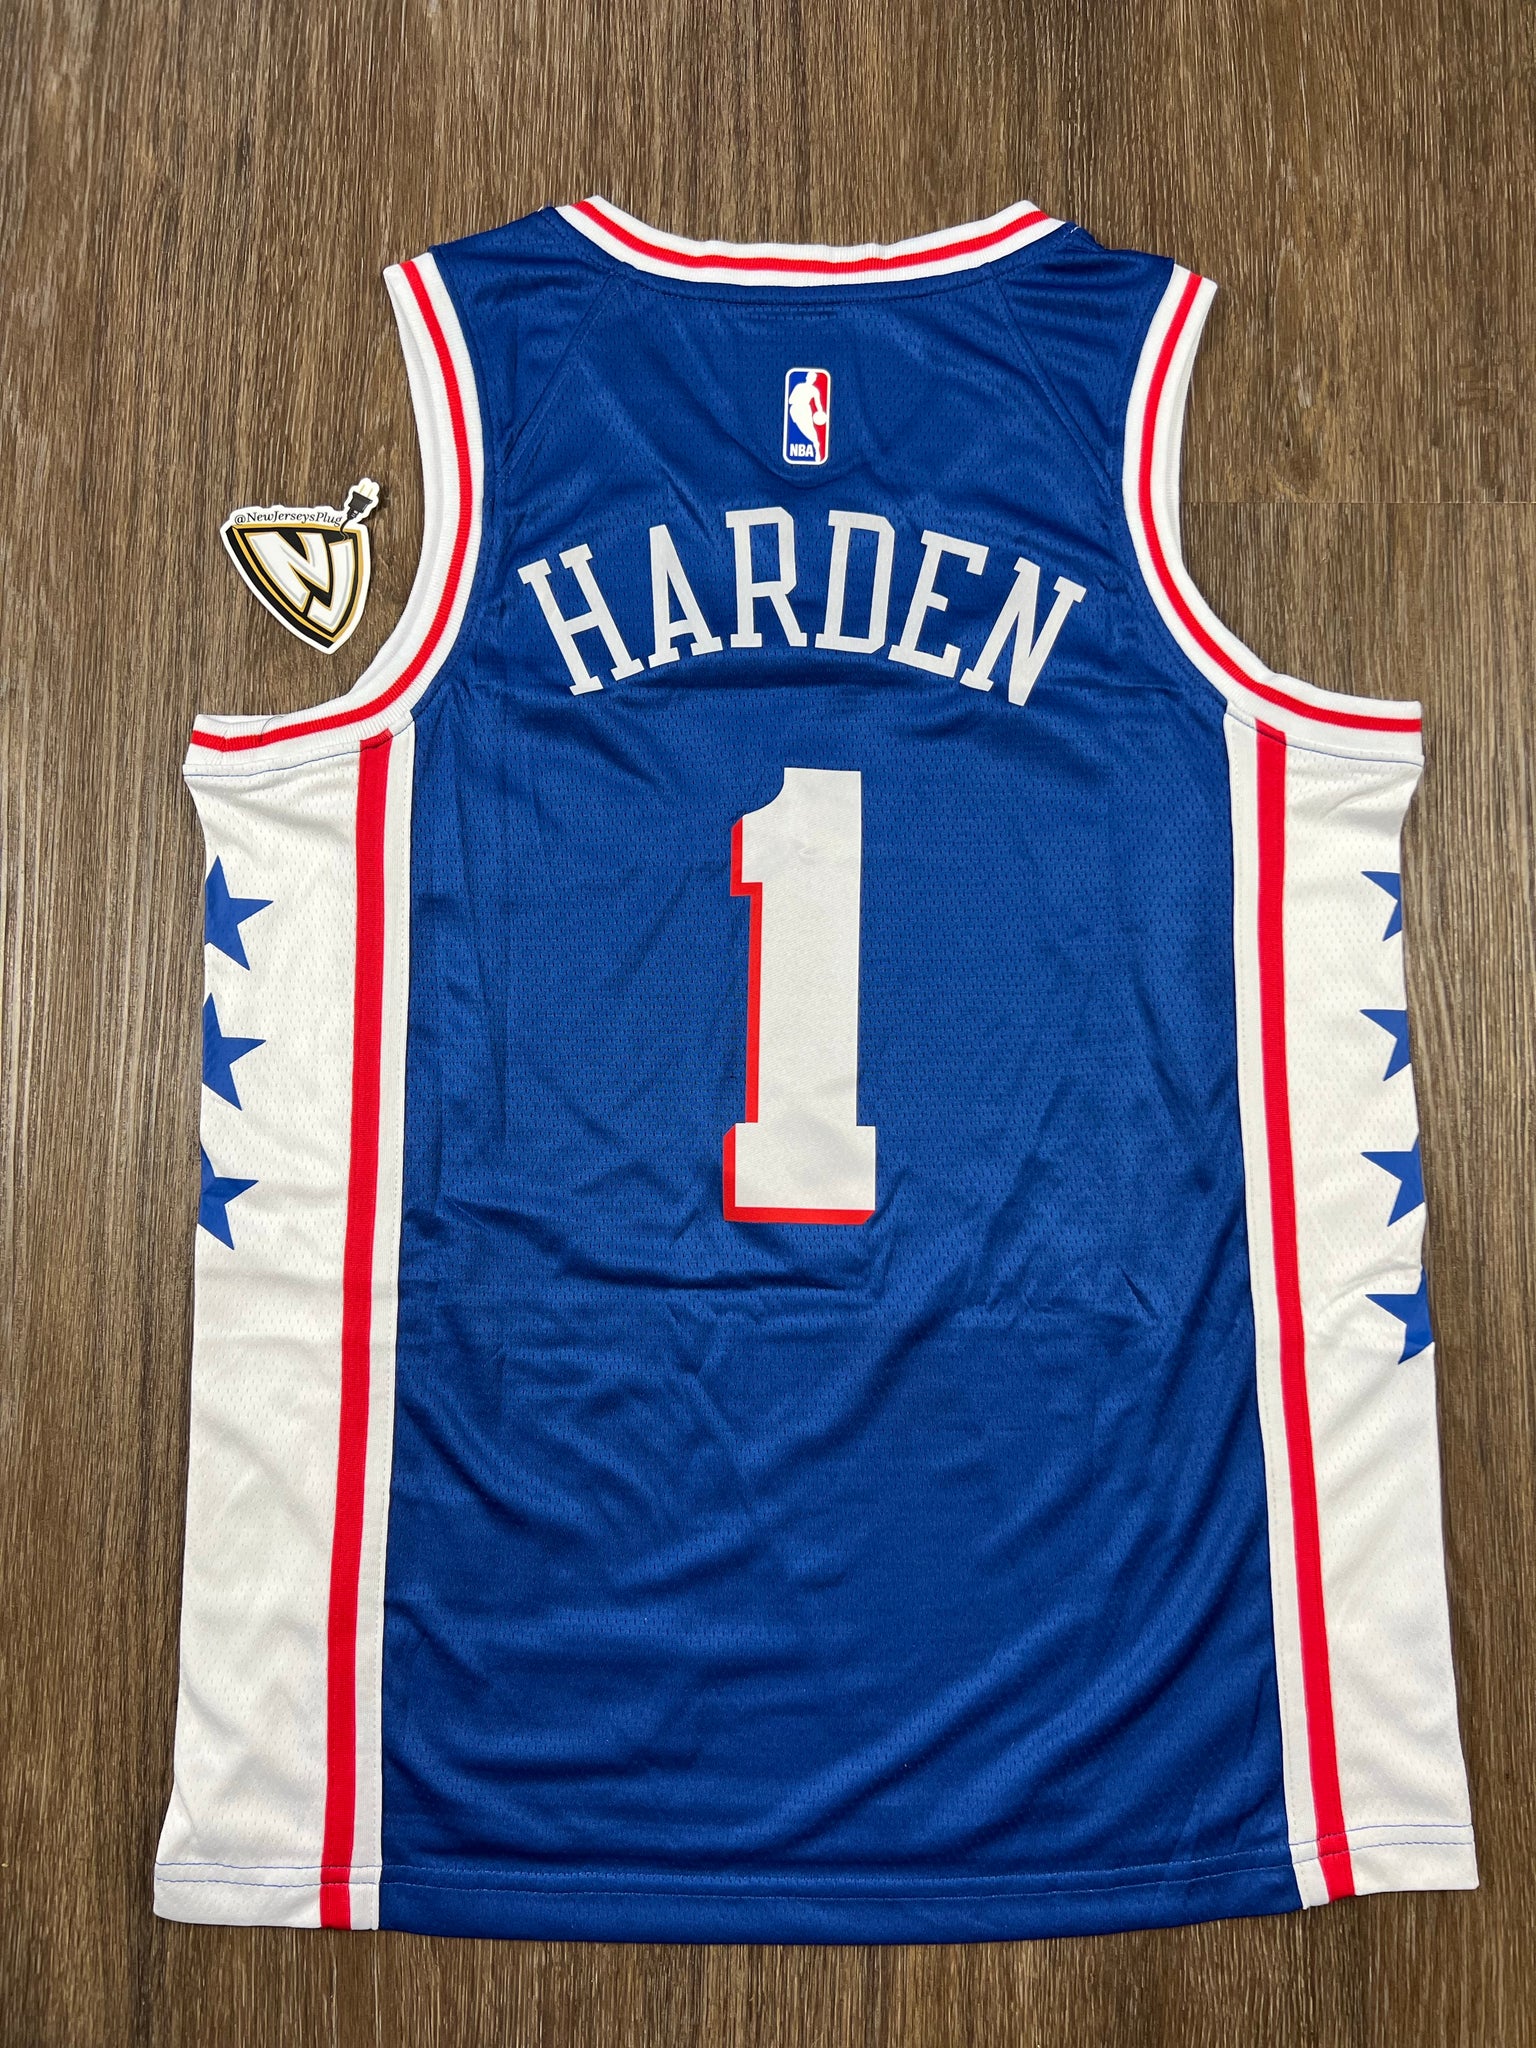 Philadelphia 76ers James Harden City Jersey